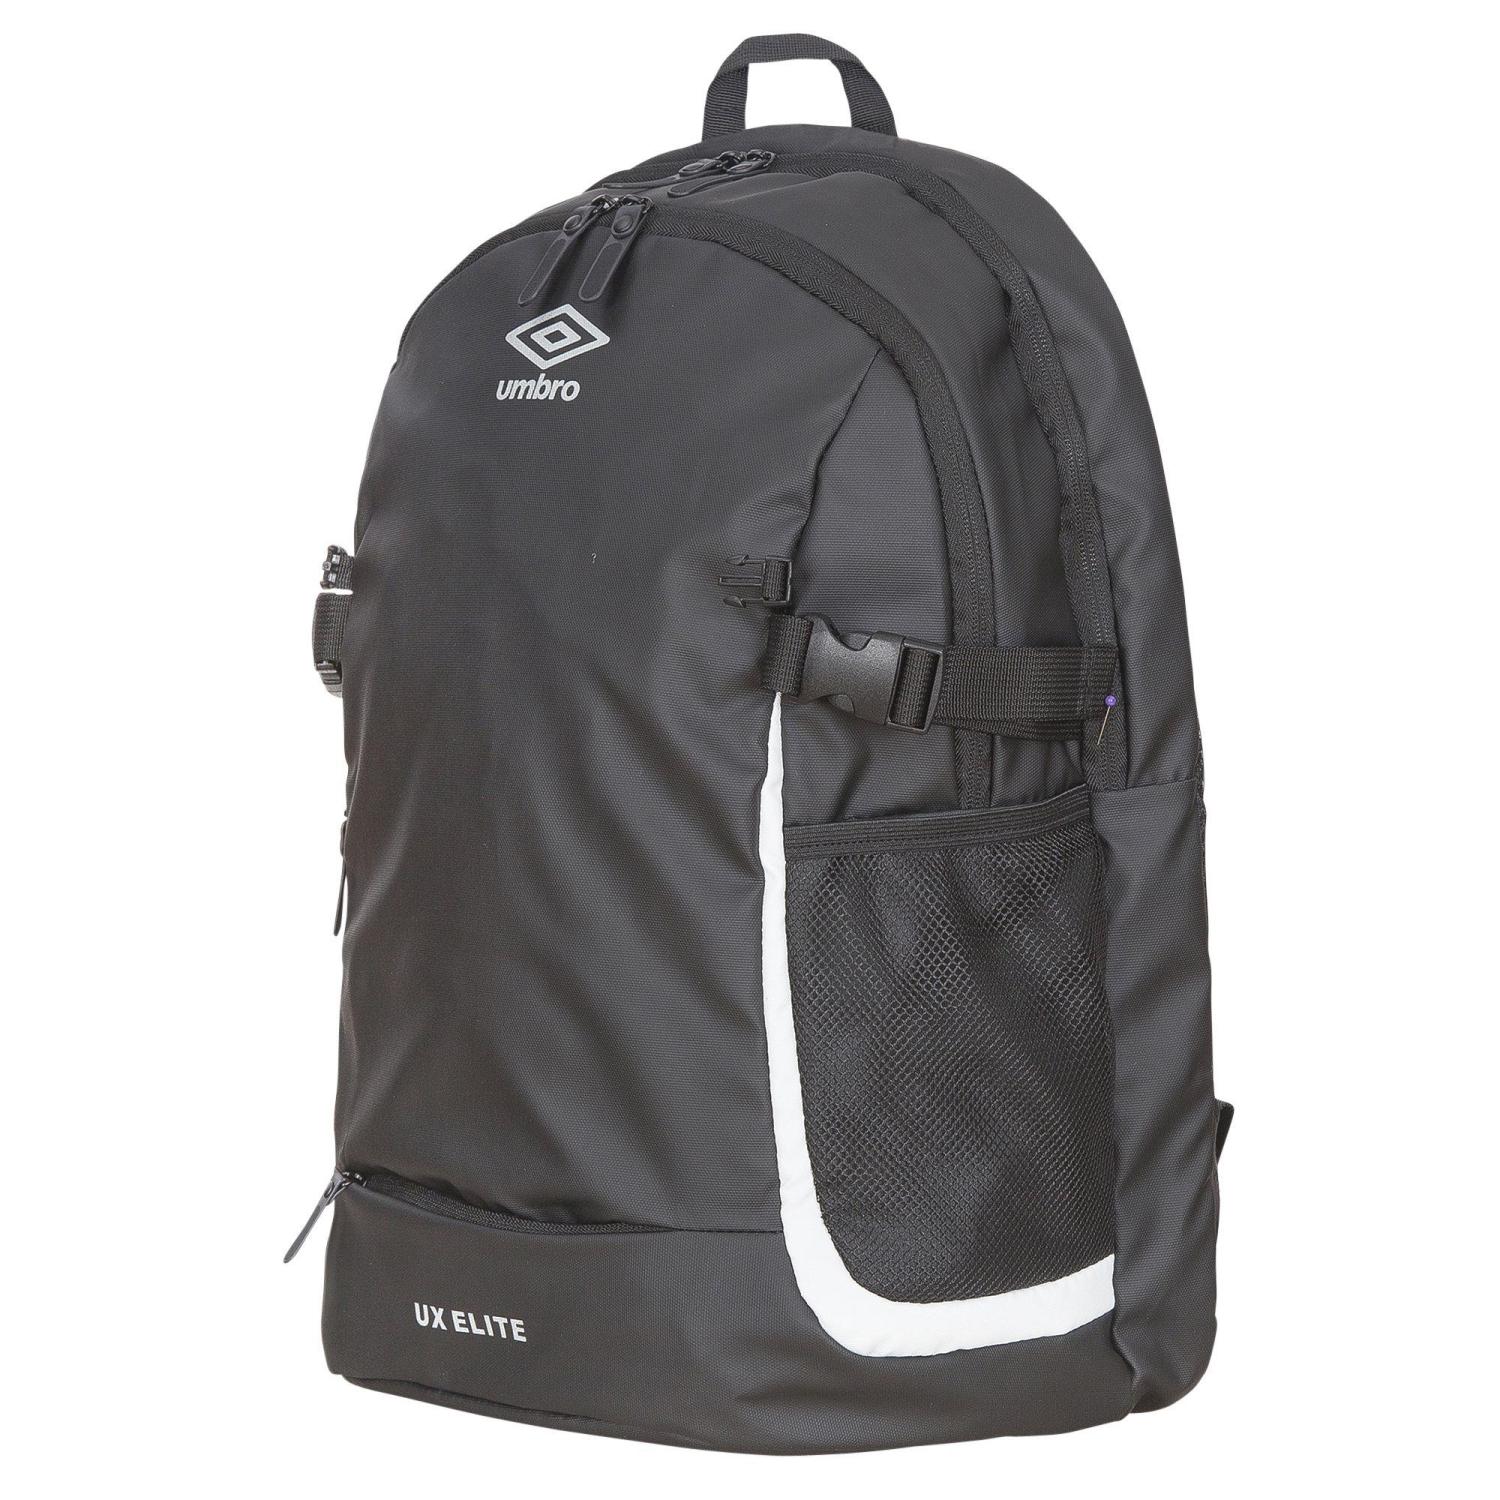 UX Elite backpack svart